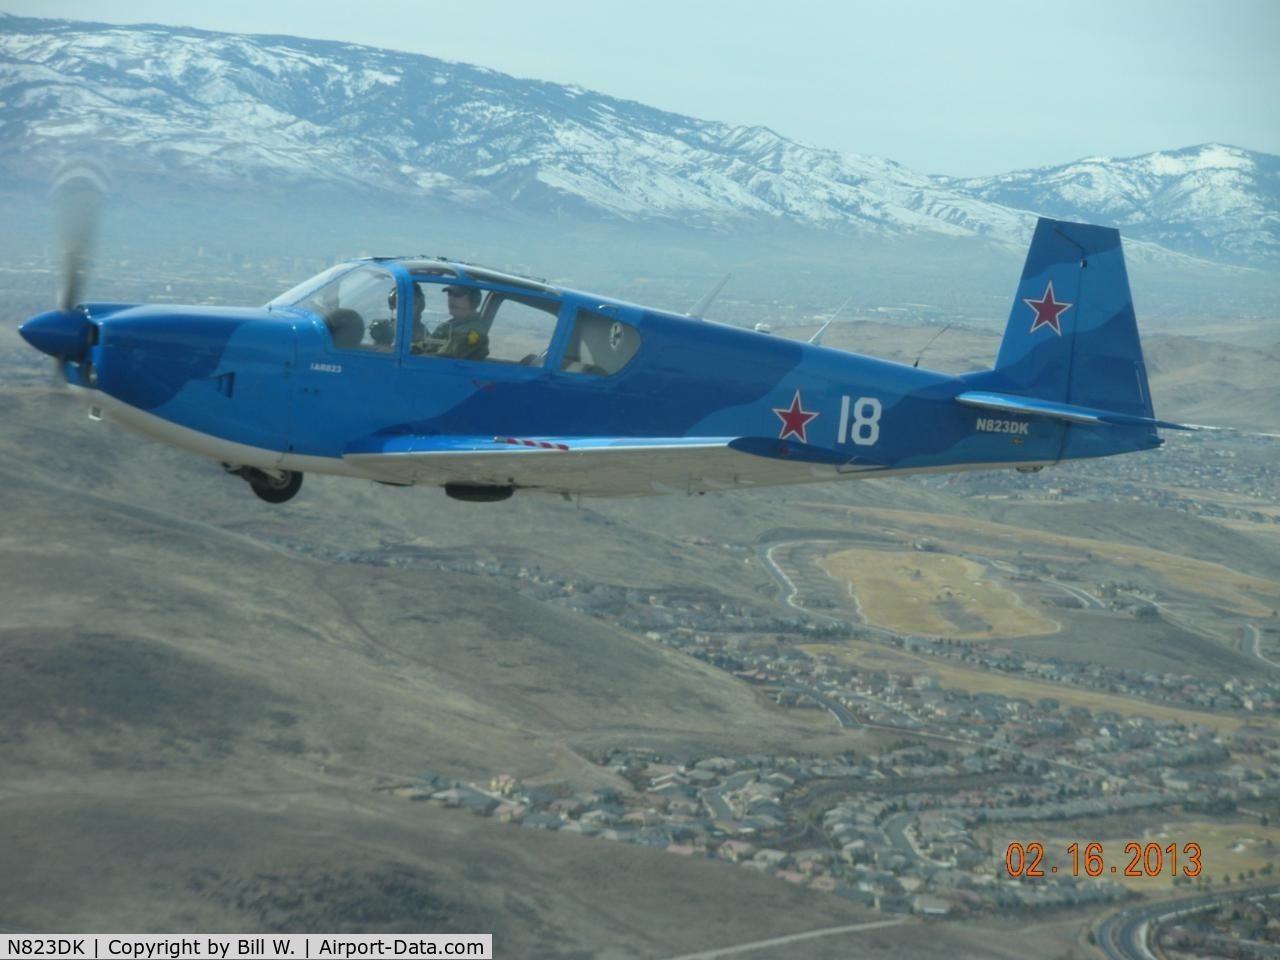 N823DK, 1975 IAR IAR-823 C/N 17, March 2013 over Reno NV area